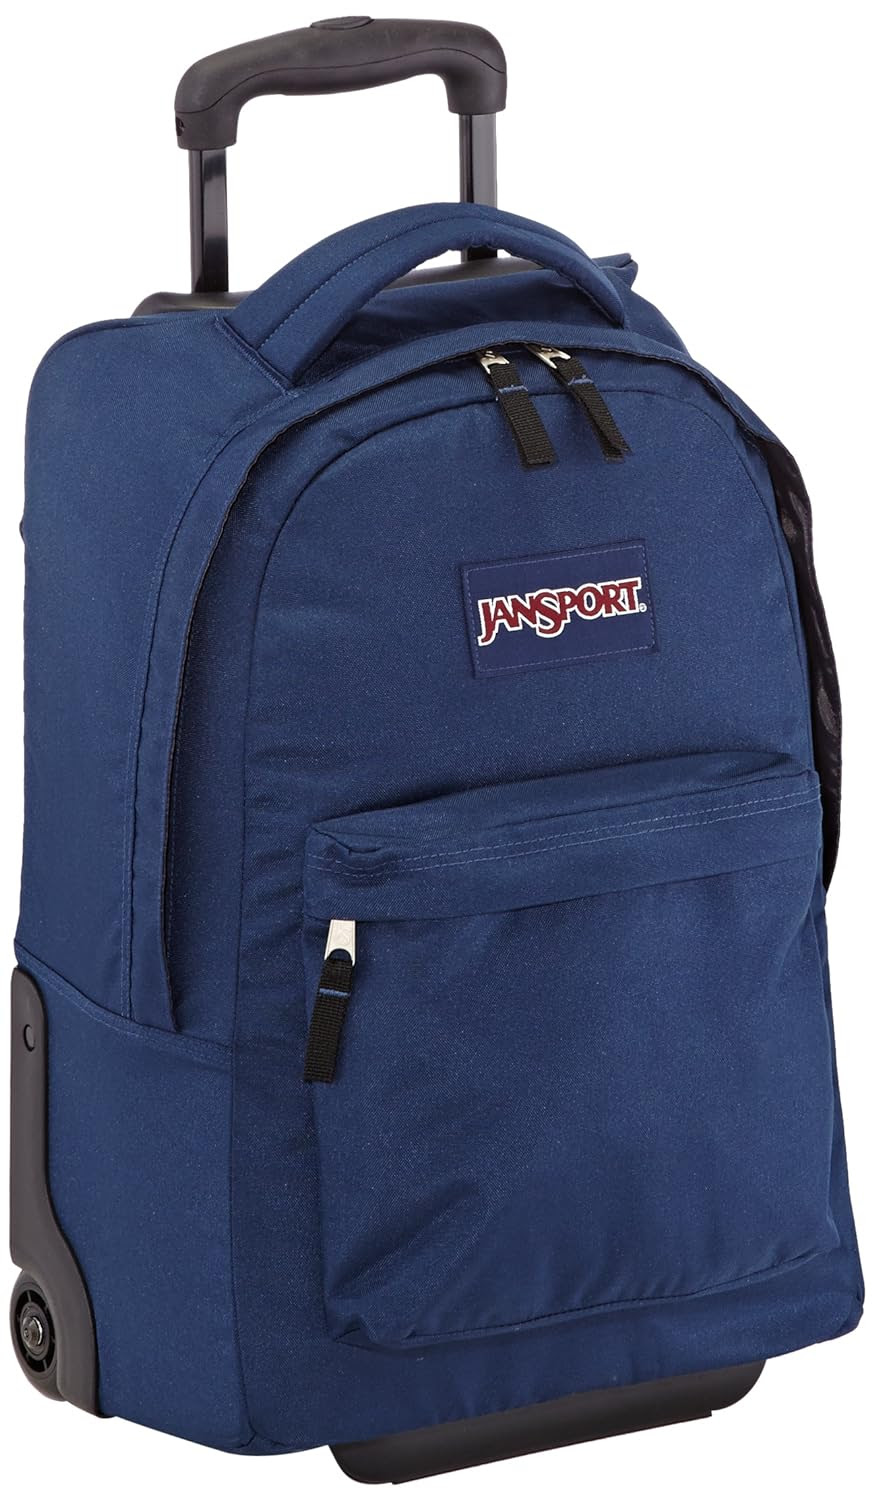 Jansport Rolling Backpacks For School